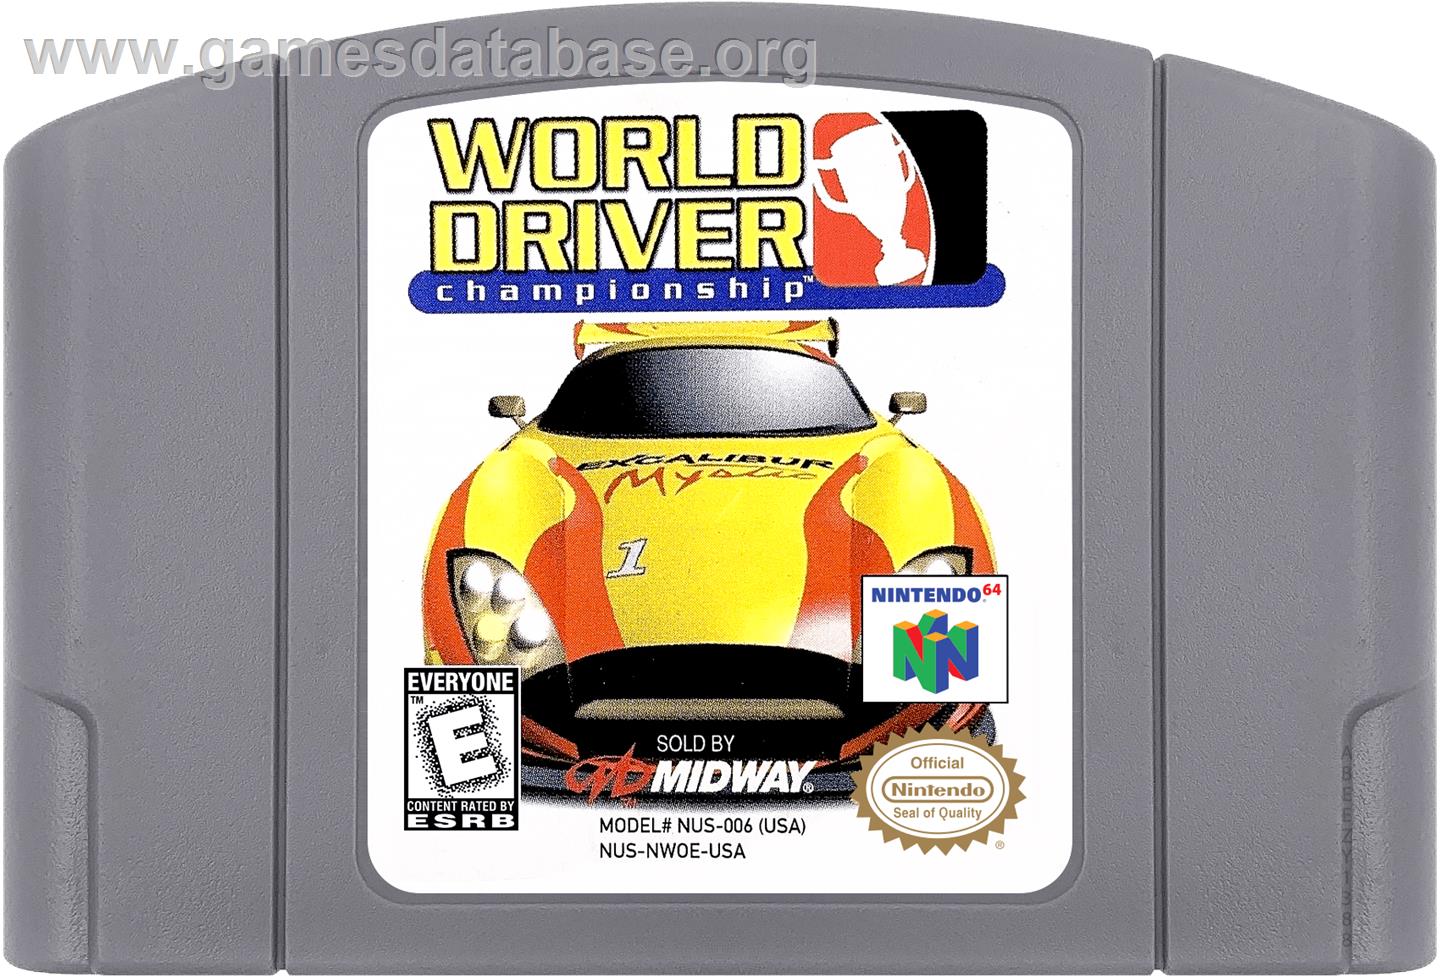 World Driver Championship - Nintendo N64 - Artwork - Cartridge